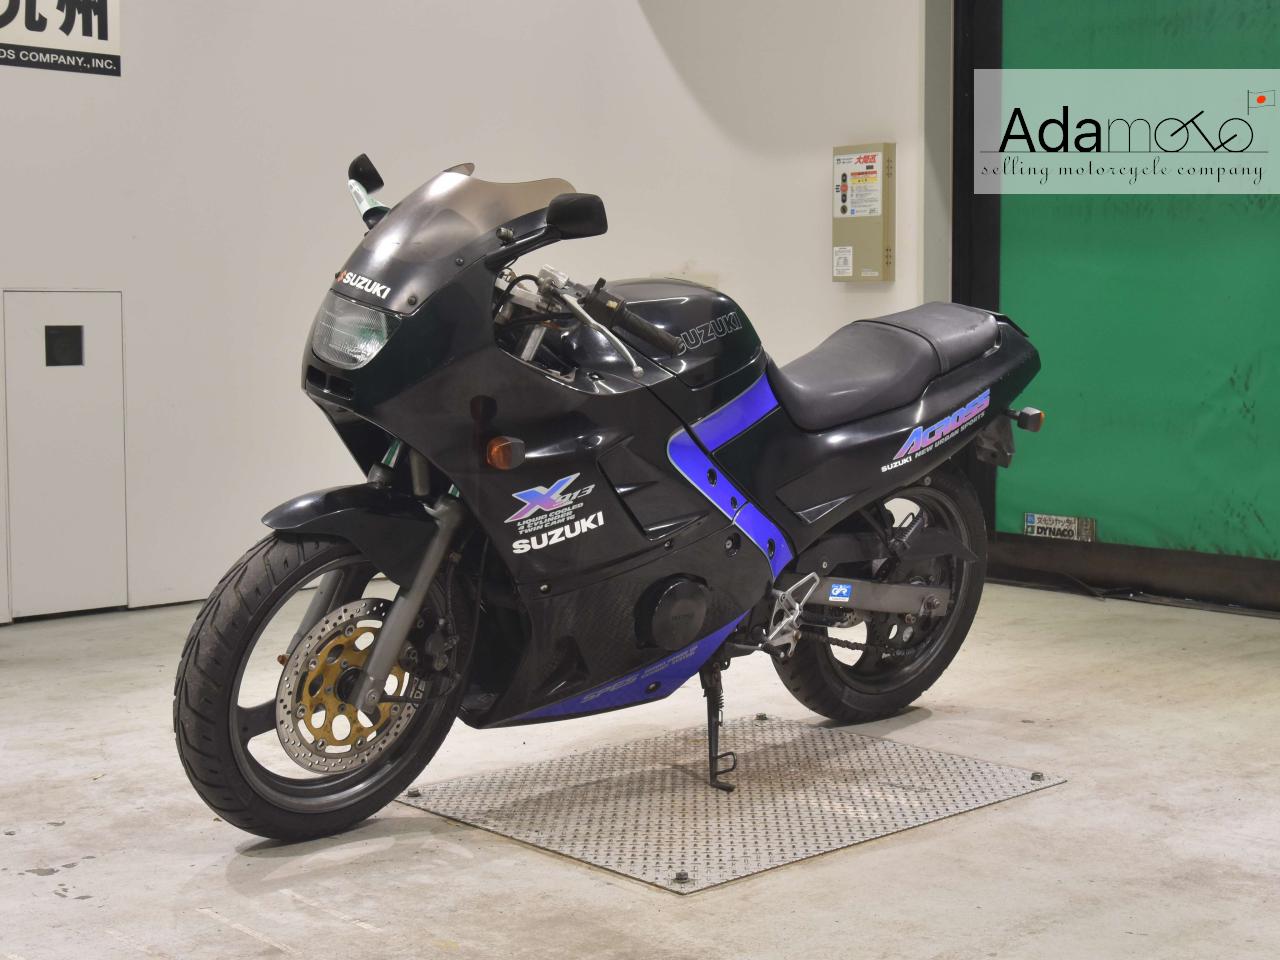 Suzuki ACROSS - Adamoto - Motorcycles from Japan